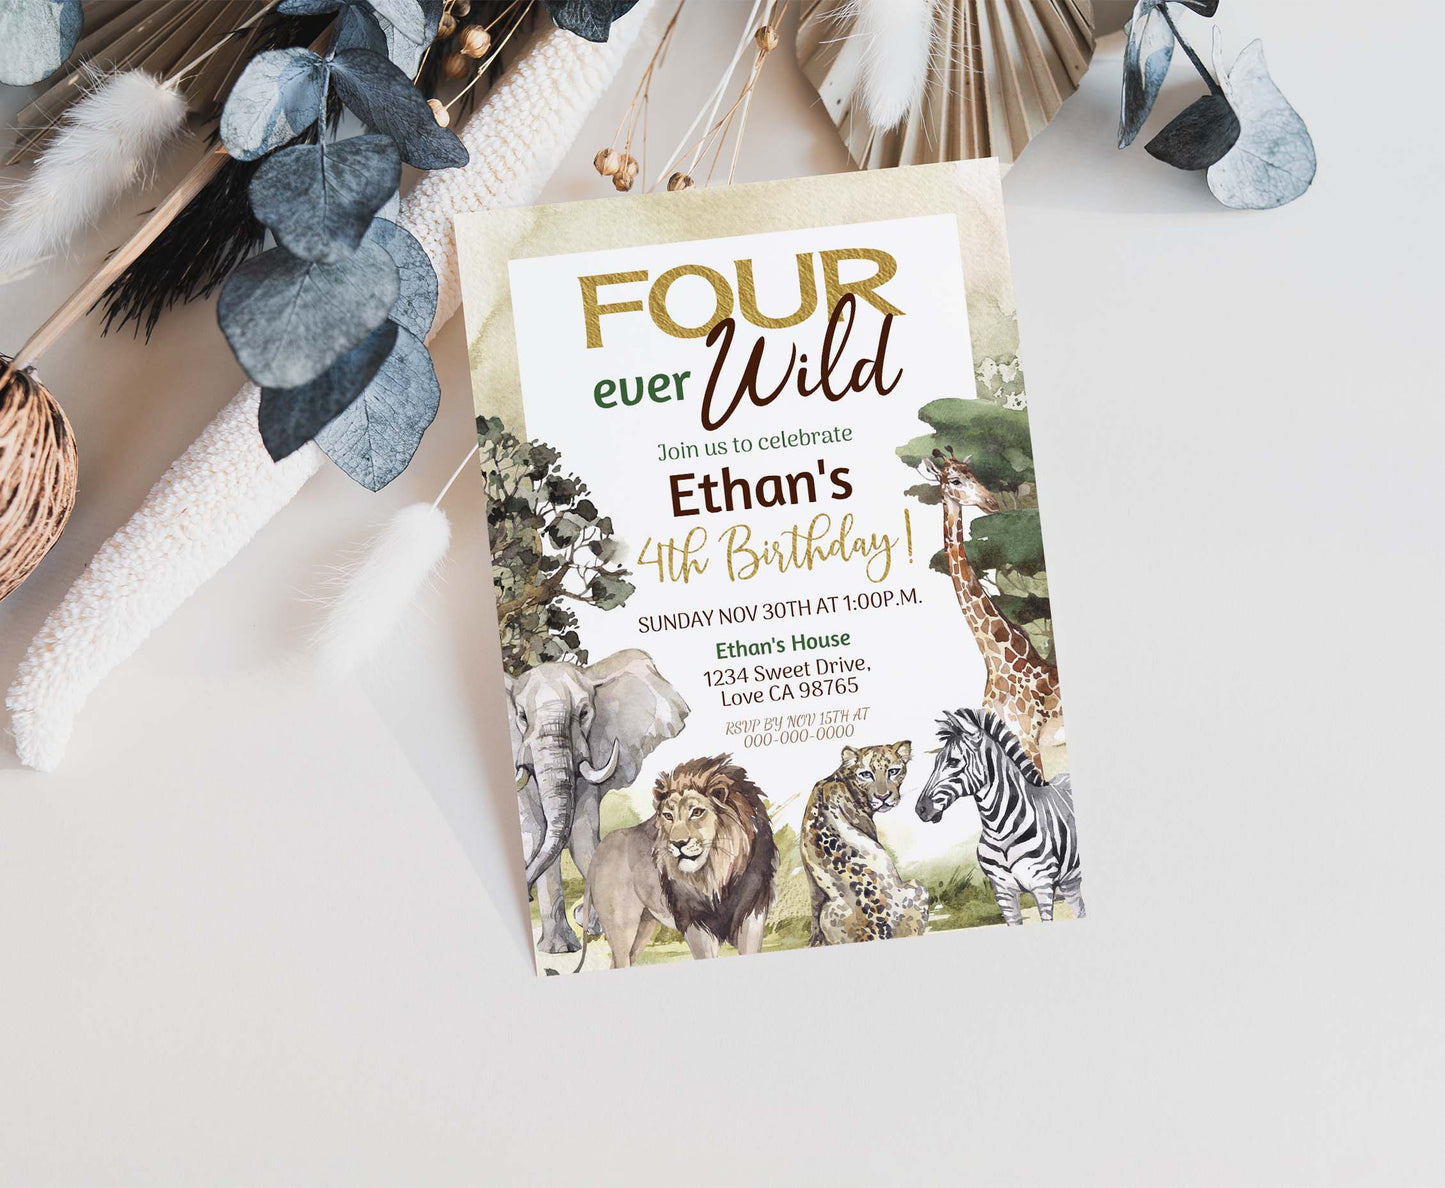 Four ever wild Birthday Invitation | Safari 4th birthday Party Invite - 35I